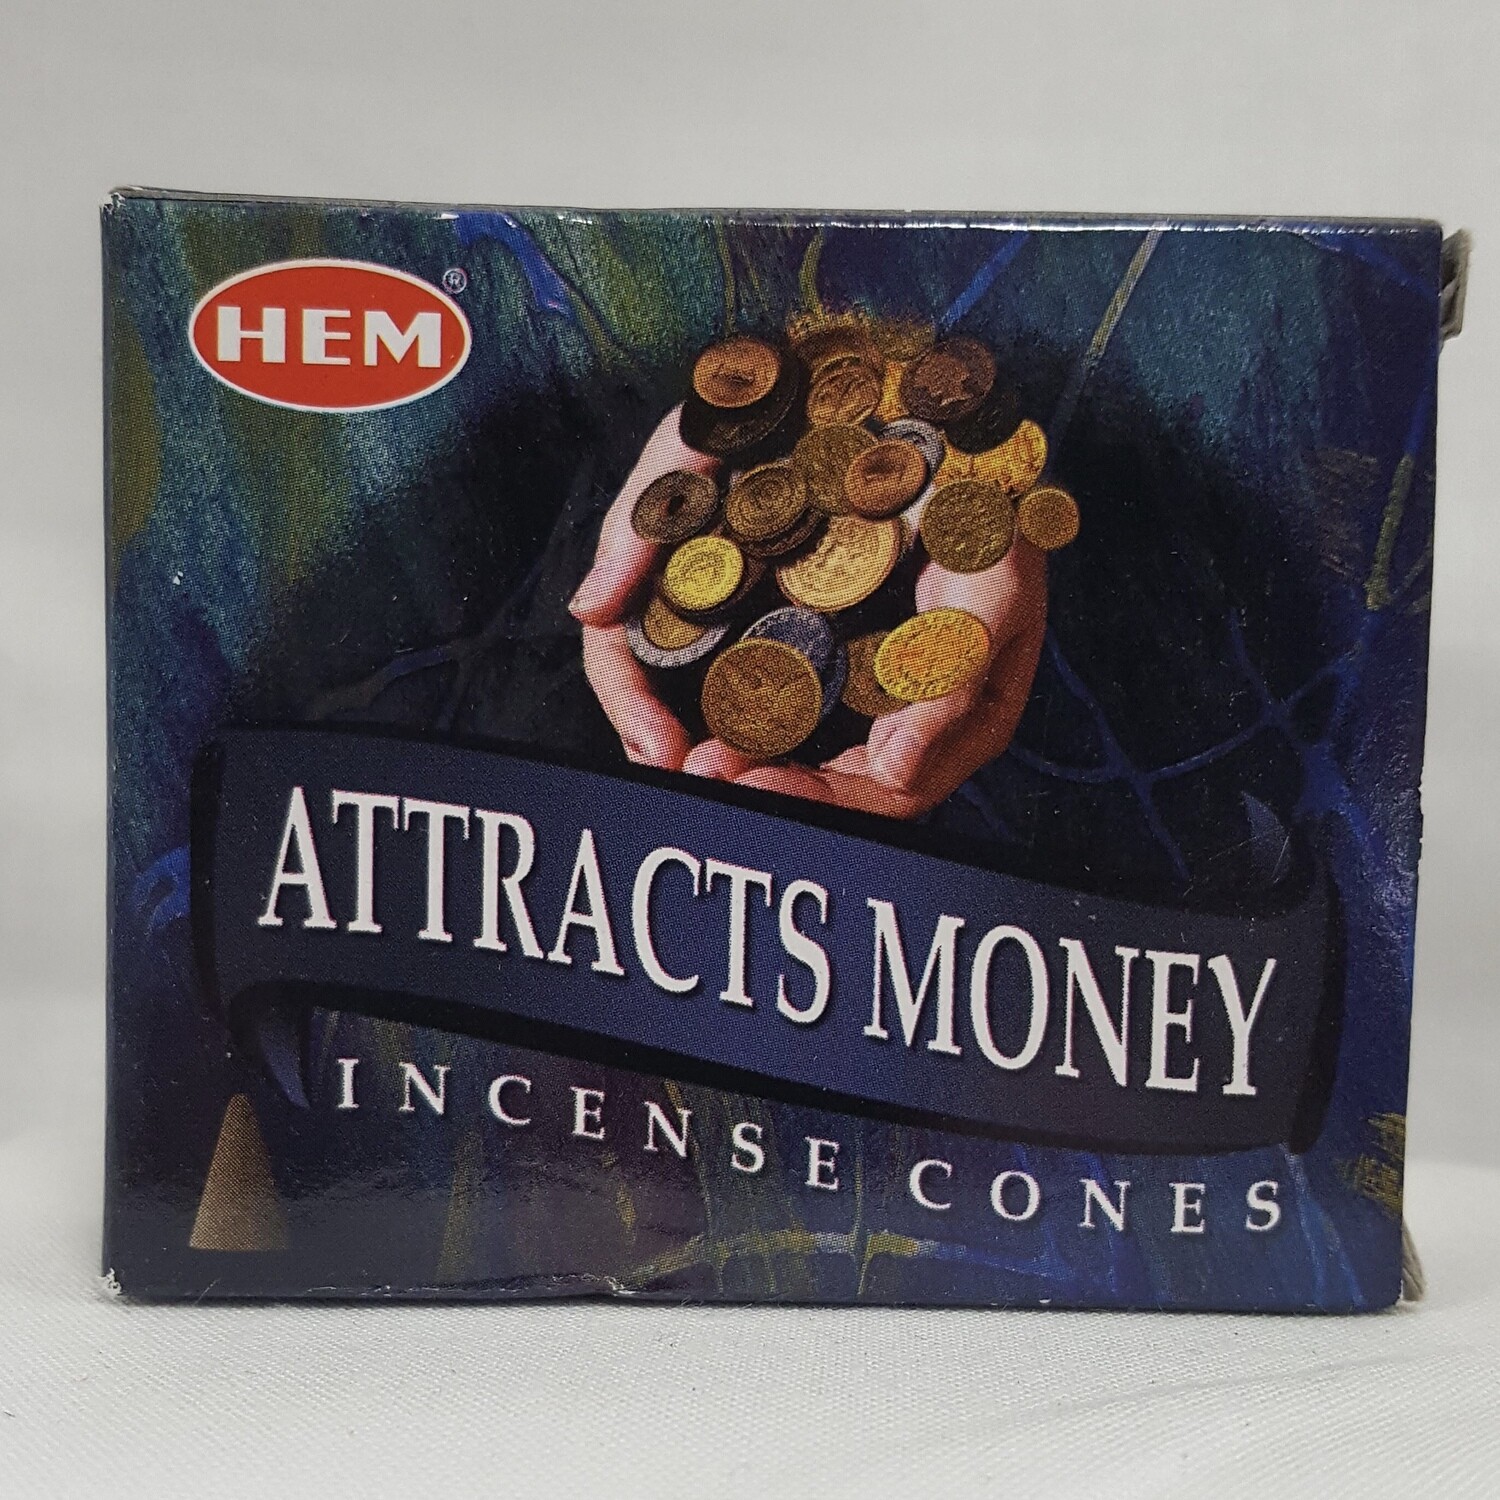 ATTRACT MONEY HEM CONES